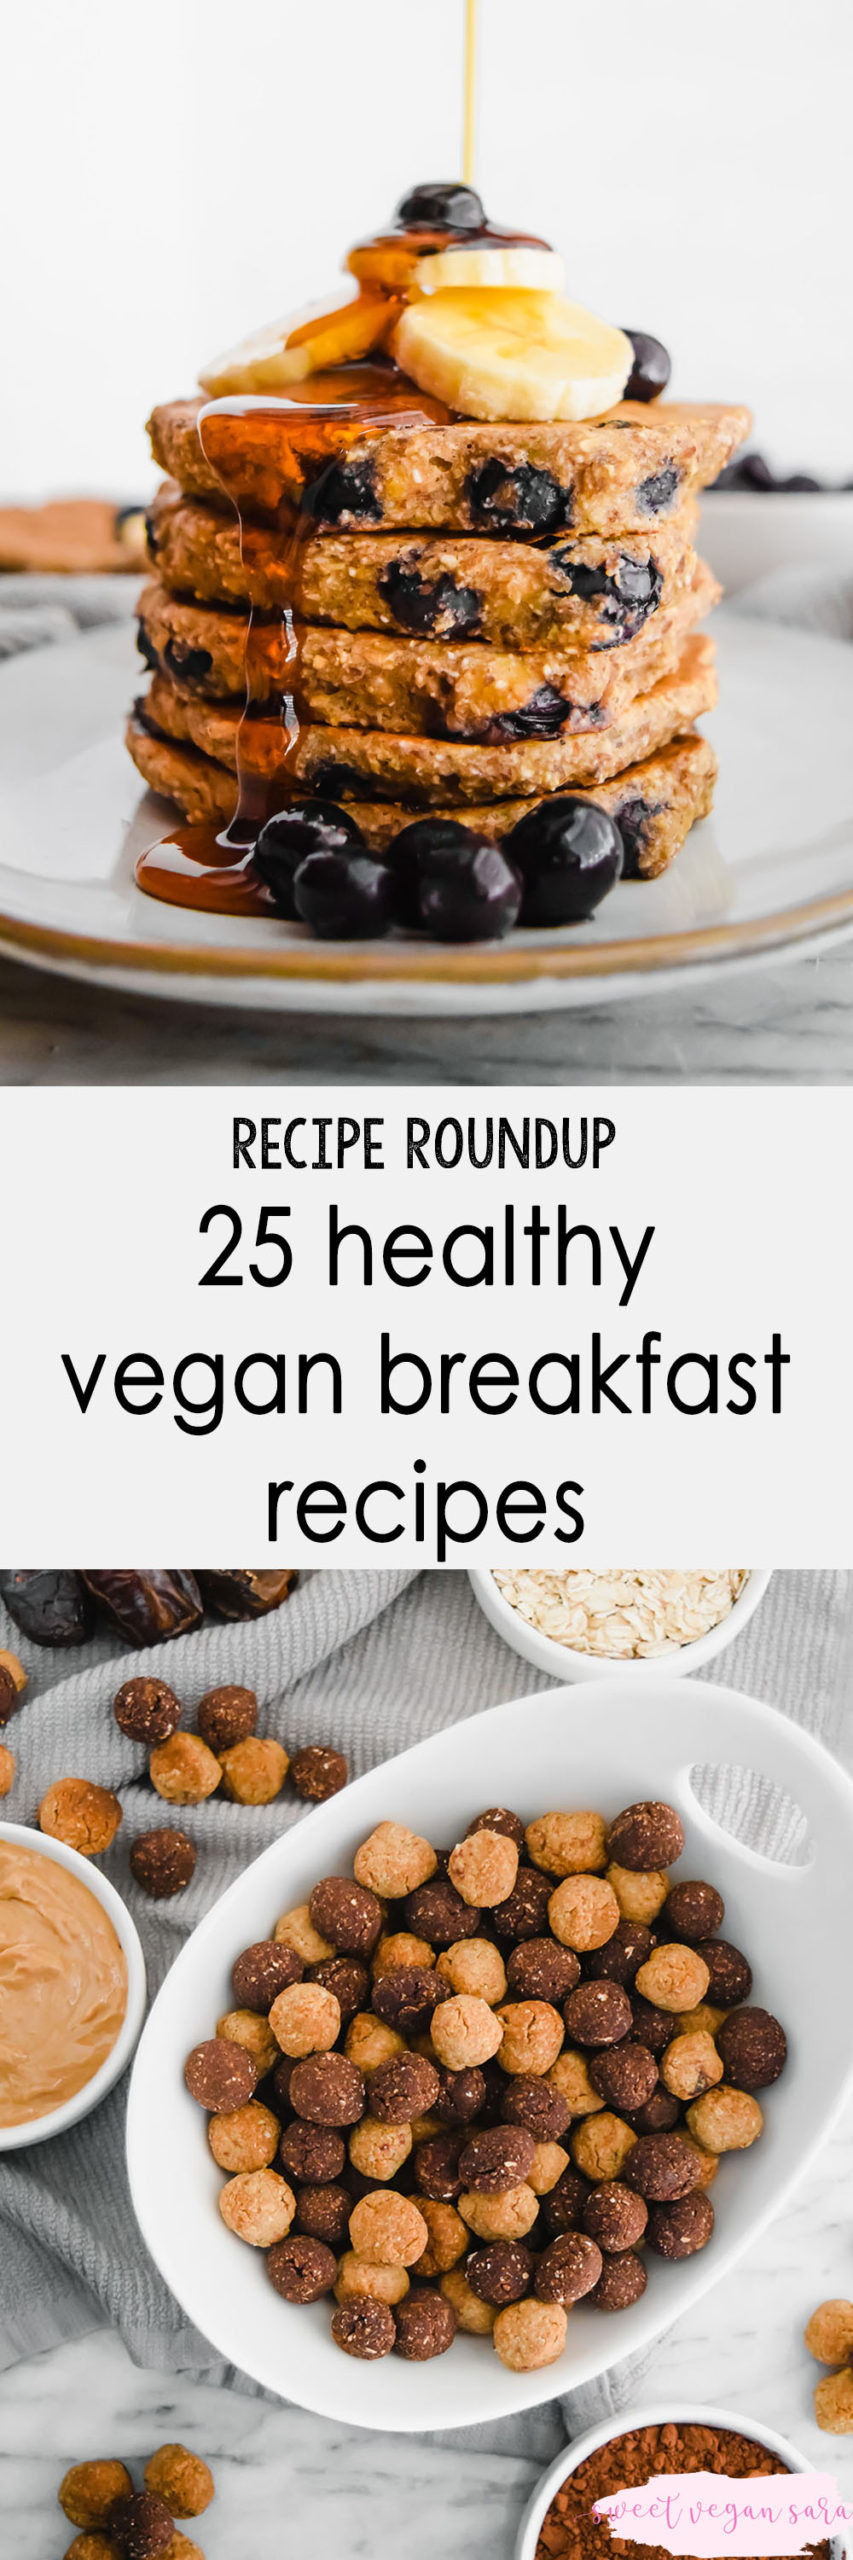 Vegan Brunch Recipes Make Ahead
 A roundup of 25 healthy vegan breakfast recipes